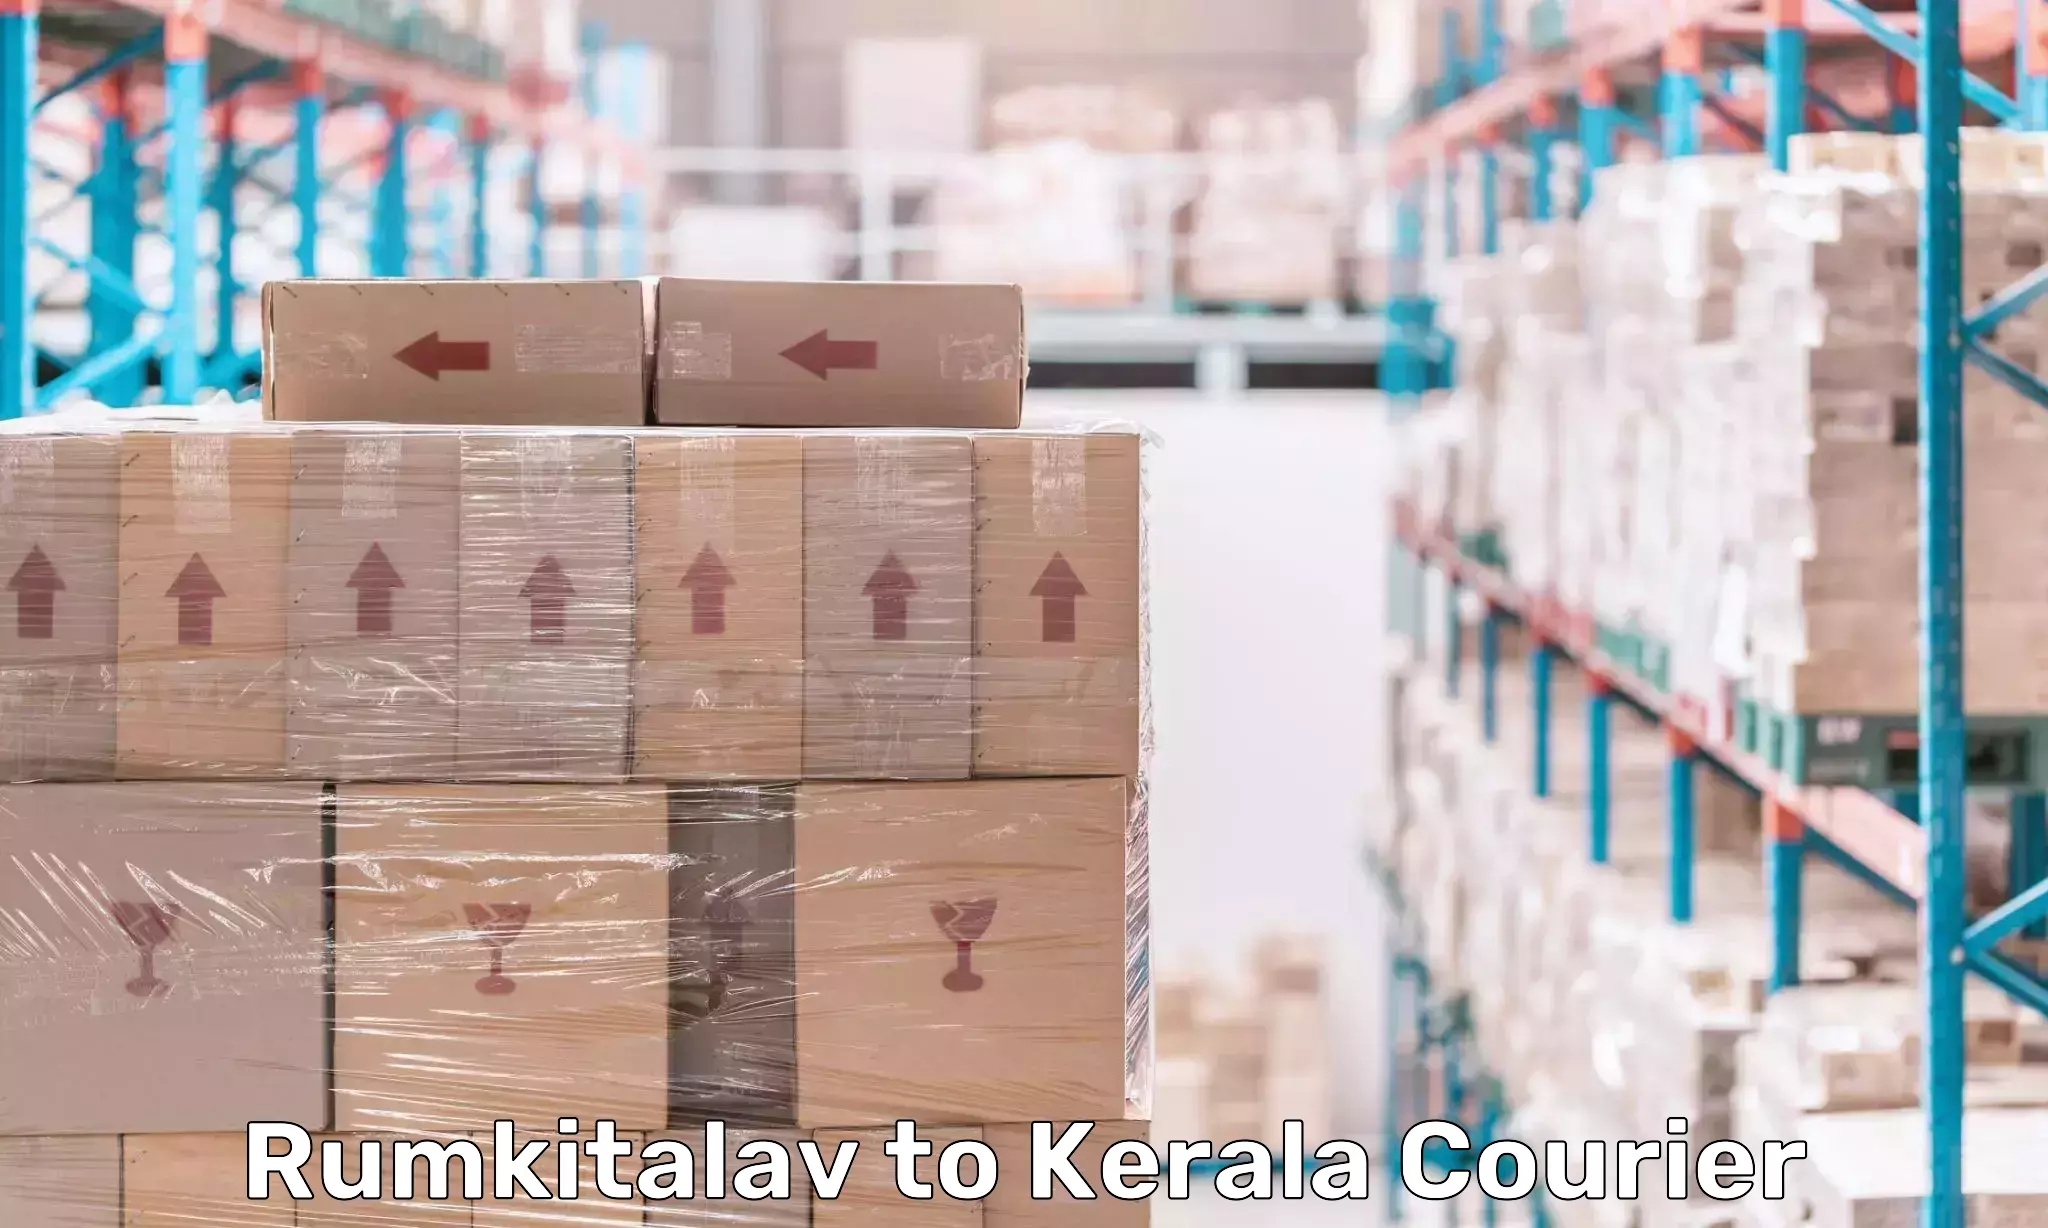 Advanced logistics management Rumkitalav to Kottayam